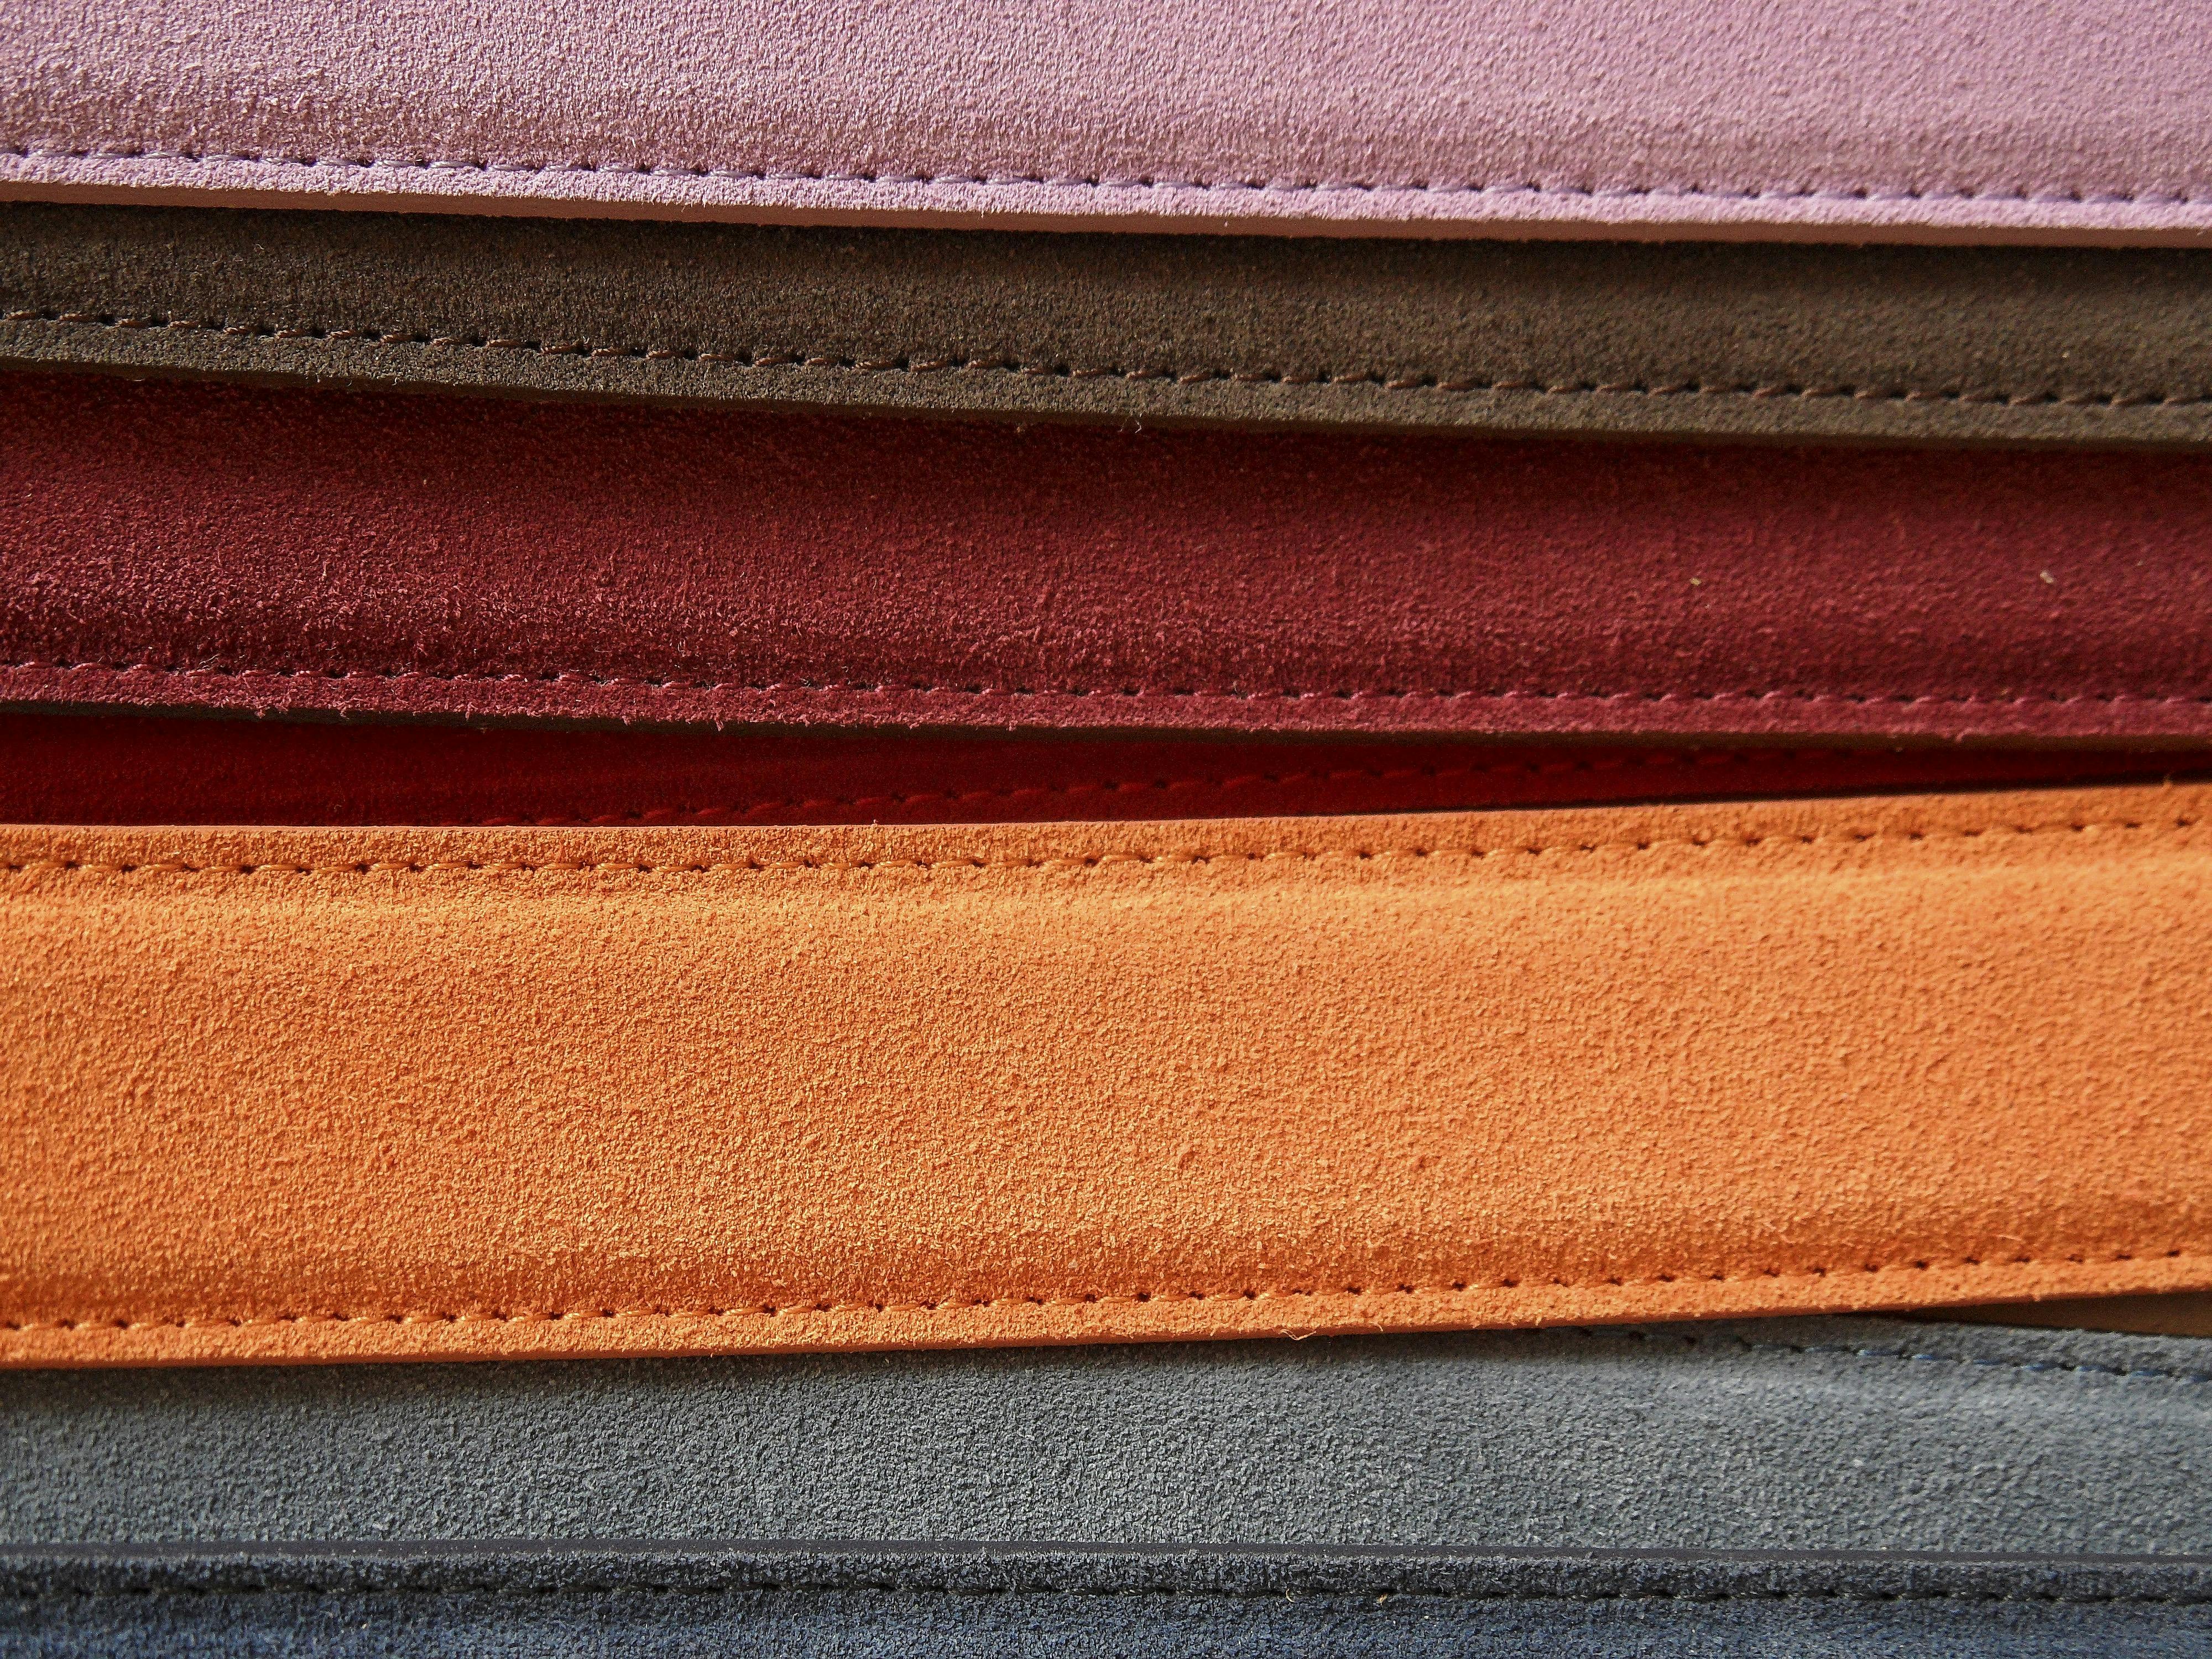 Leather Garrison Belt Grayscale Photo · Free Stock Photo